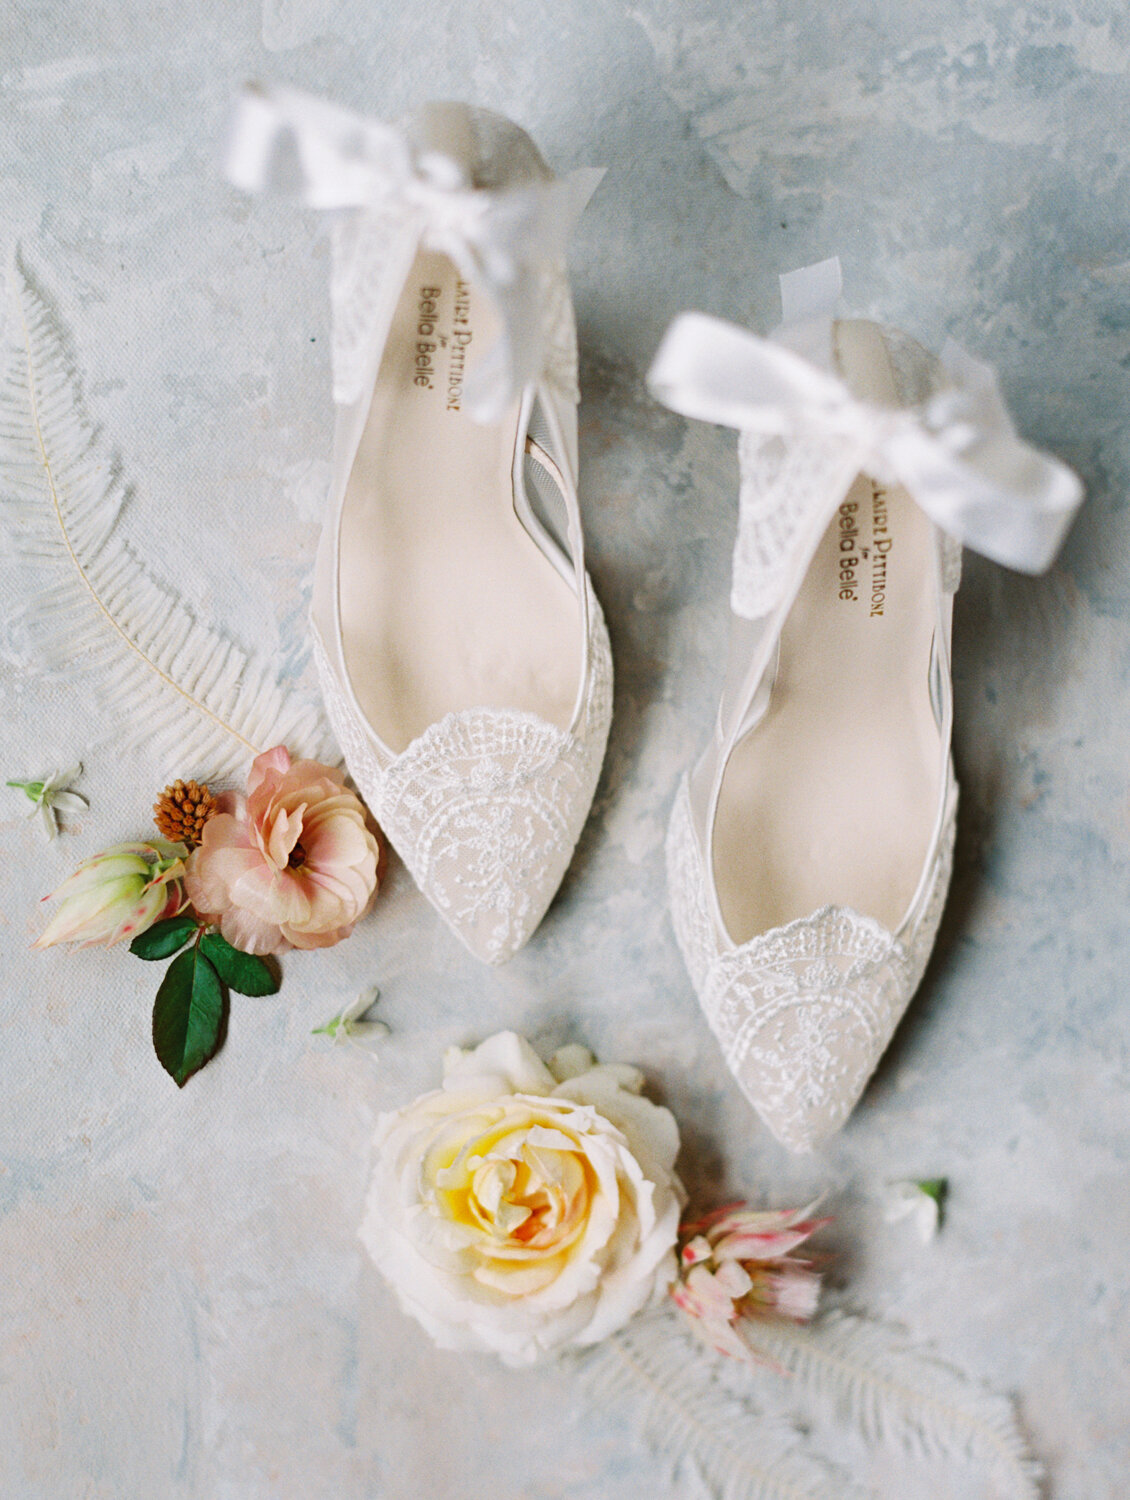 wisteria-photography.com | Wisteria Photography | Intimate Rose Garden Wedding | Santa Ynez | Featured on Green Wedding Shoes | Southern California Photographer-4.jpg